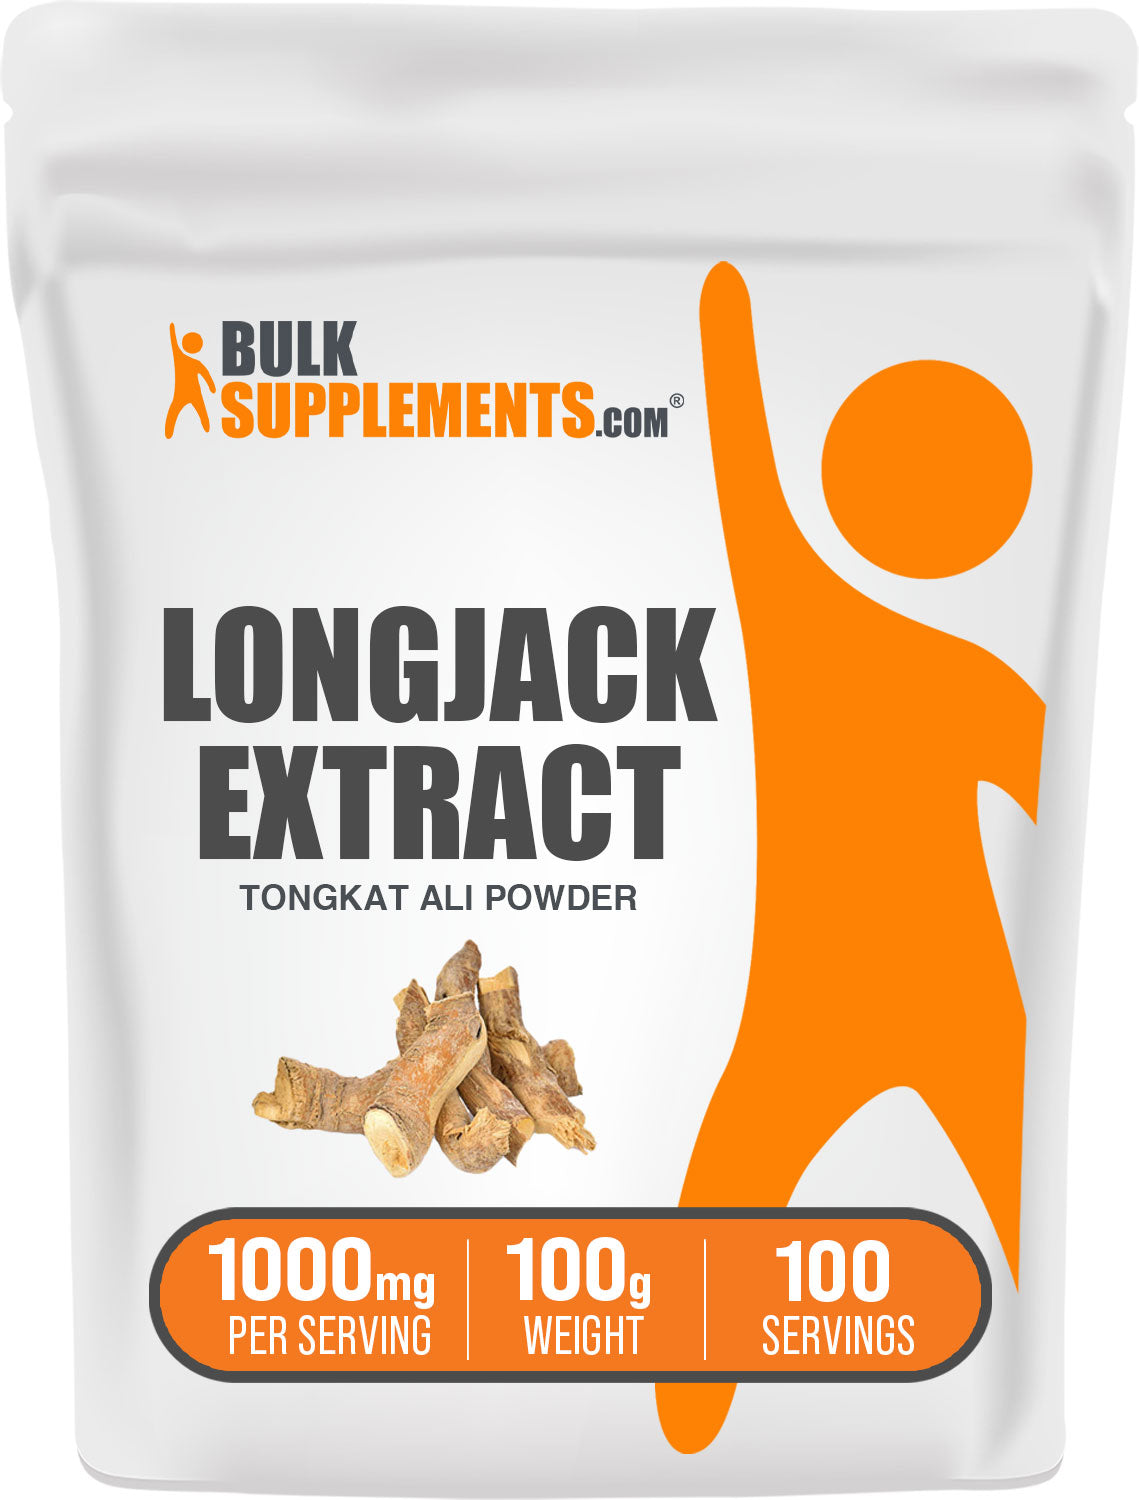 BulkSupplements.com Longjack Extract Tongkat Ali Powder 100g bag